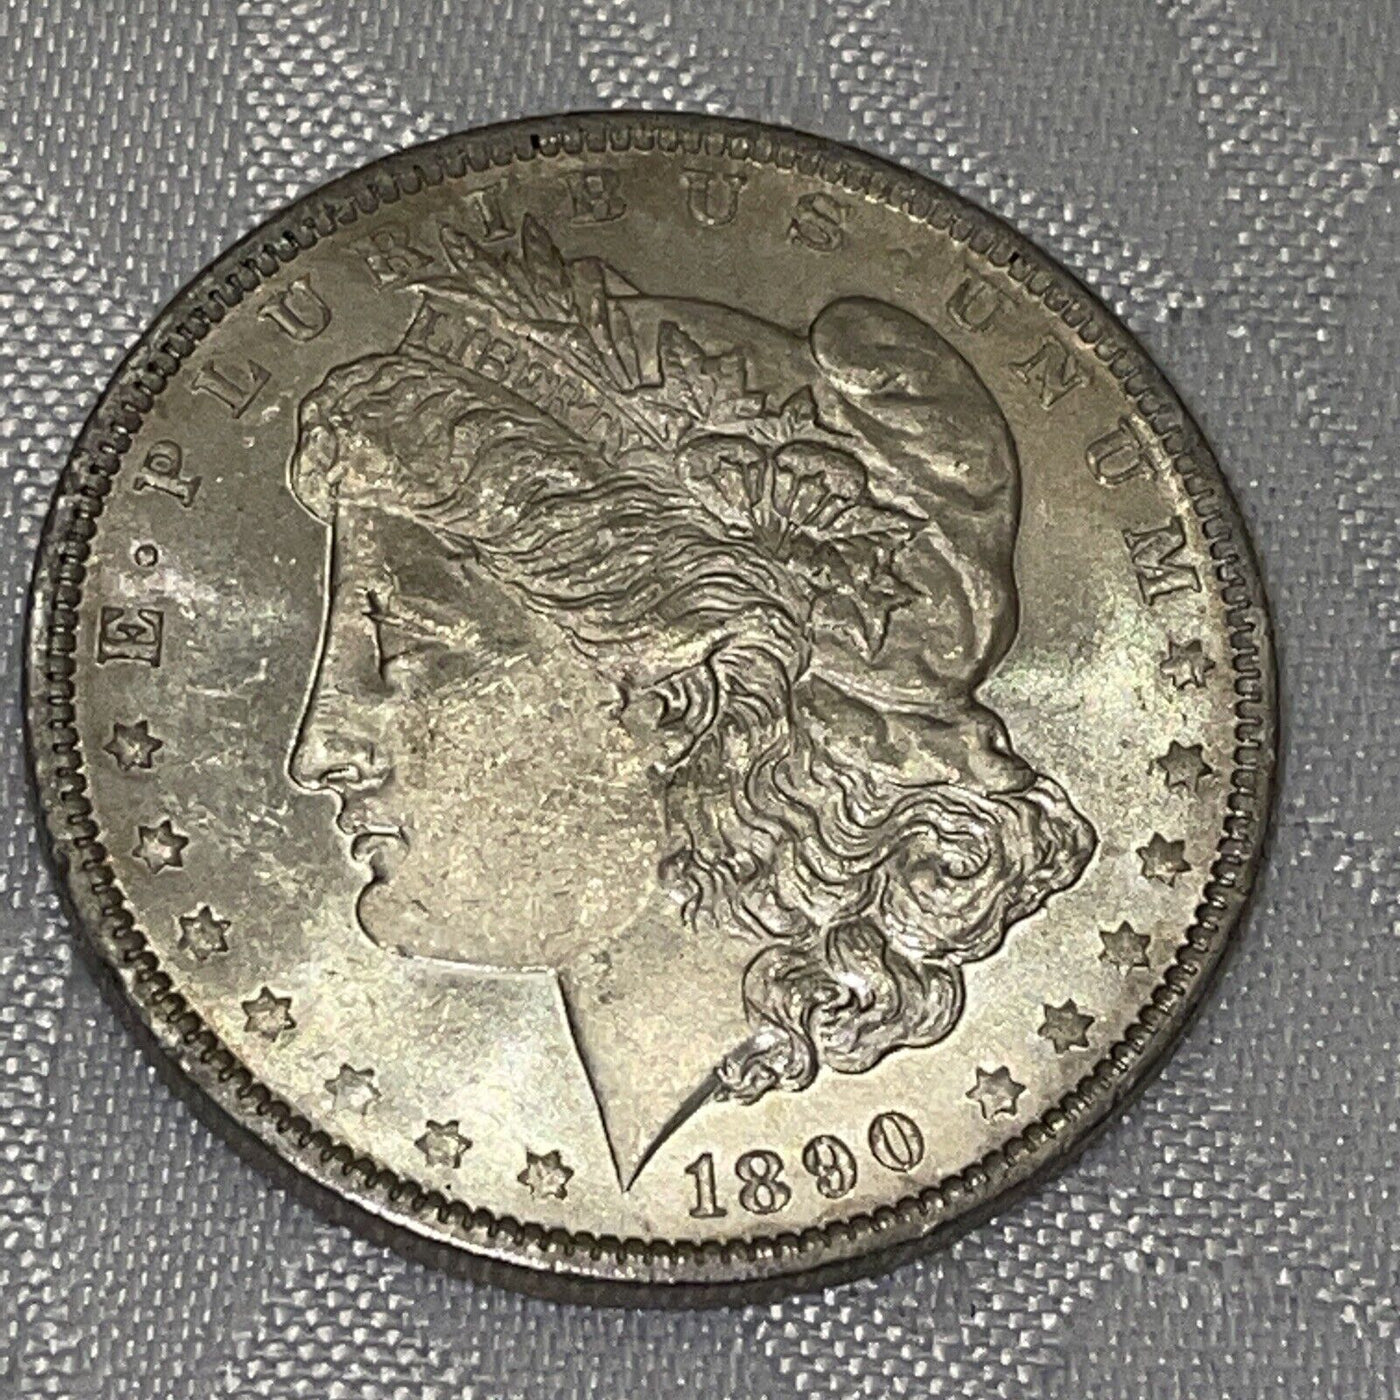 choice BU 1890 0 mirror proof like astounding coin!